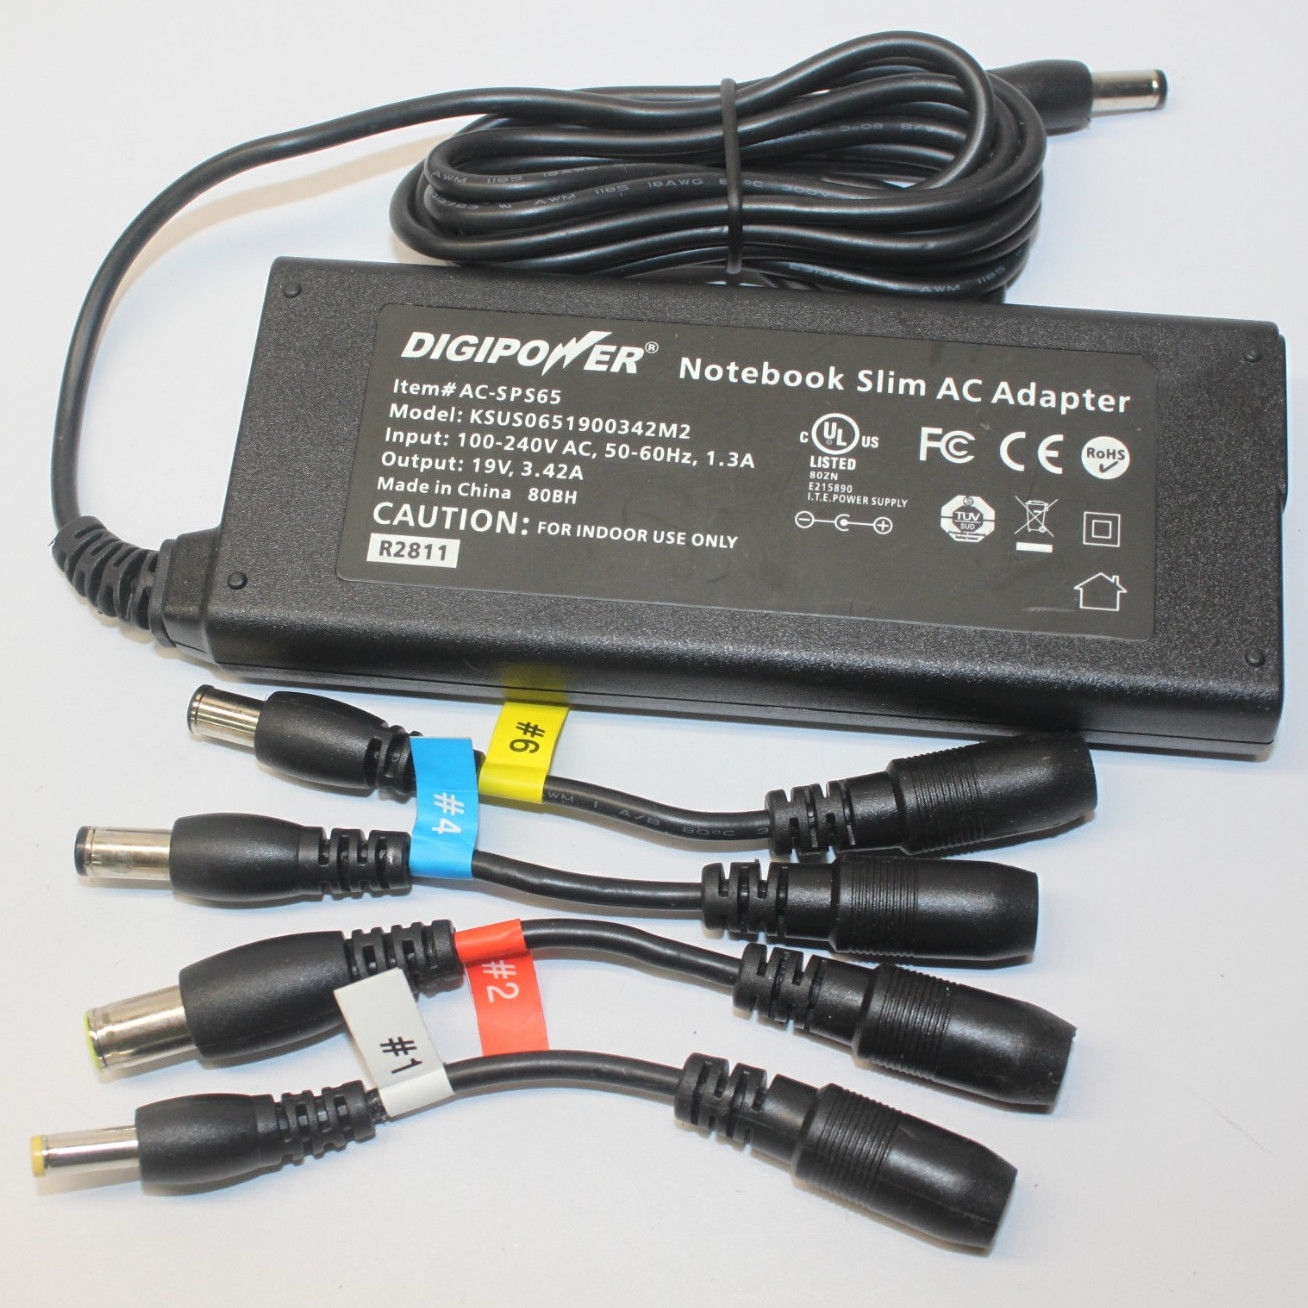 New 19V 3.42A DigiPower AC-SPS65 KSUS0651900342M2 Power Supply Ac Adapter